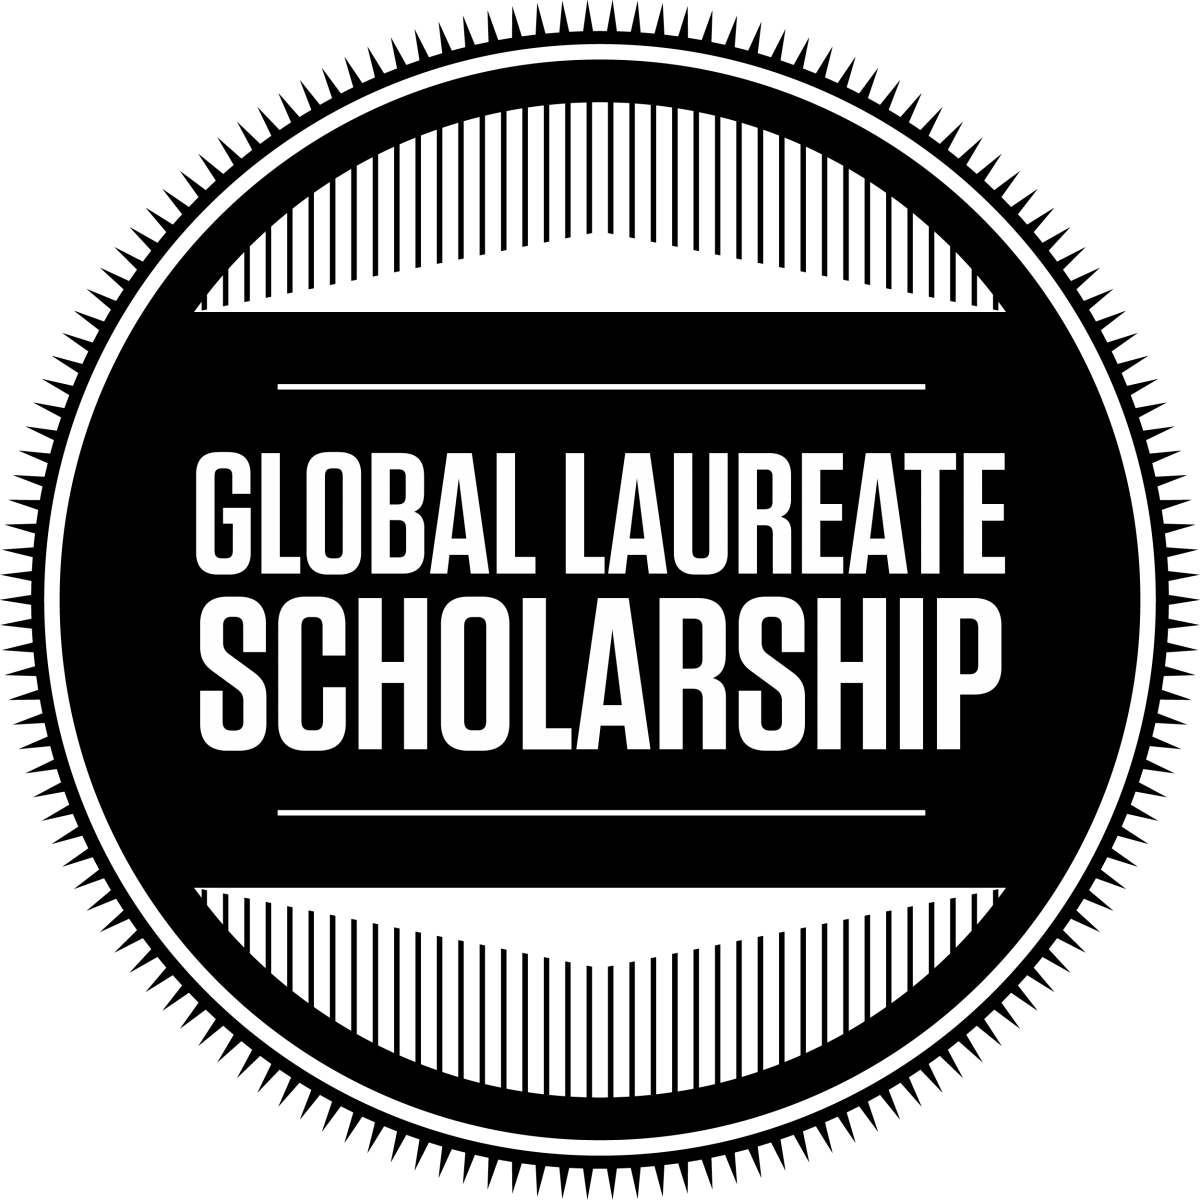 Global Laureate Scholarship logo